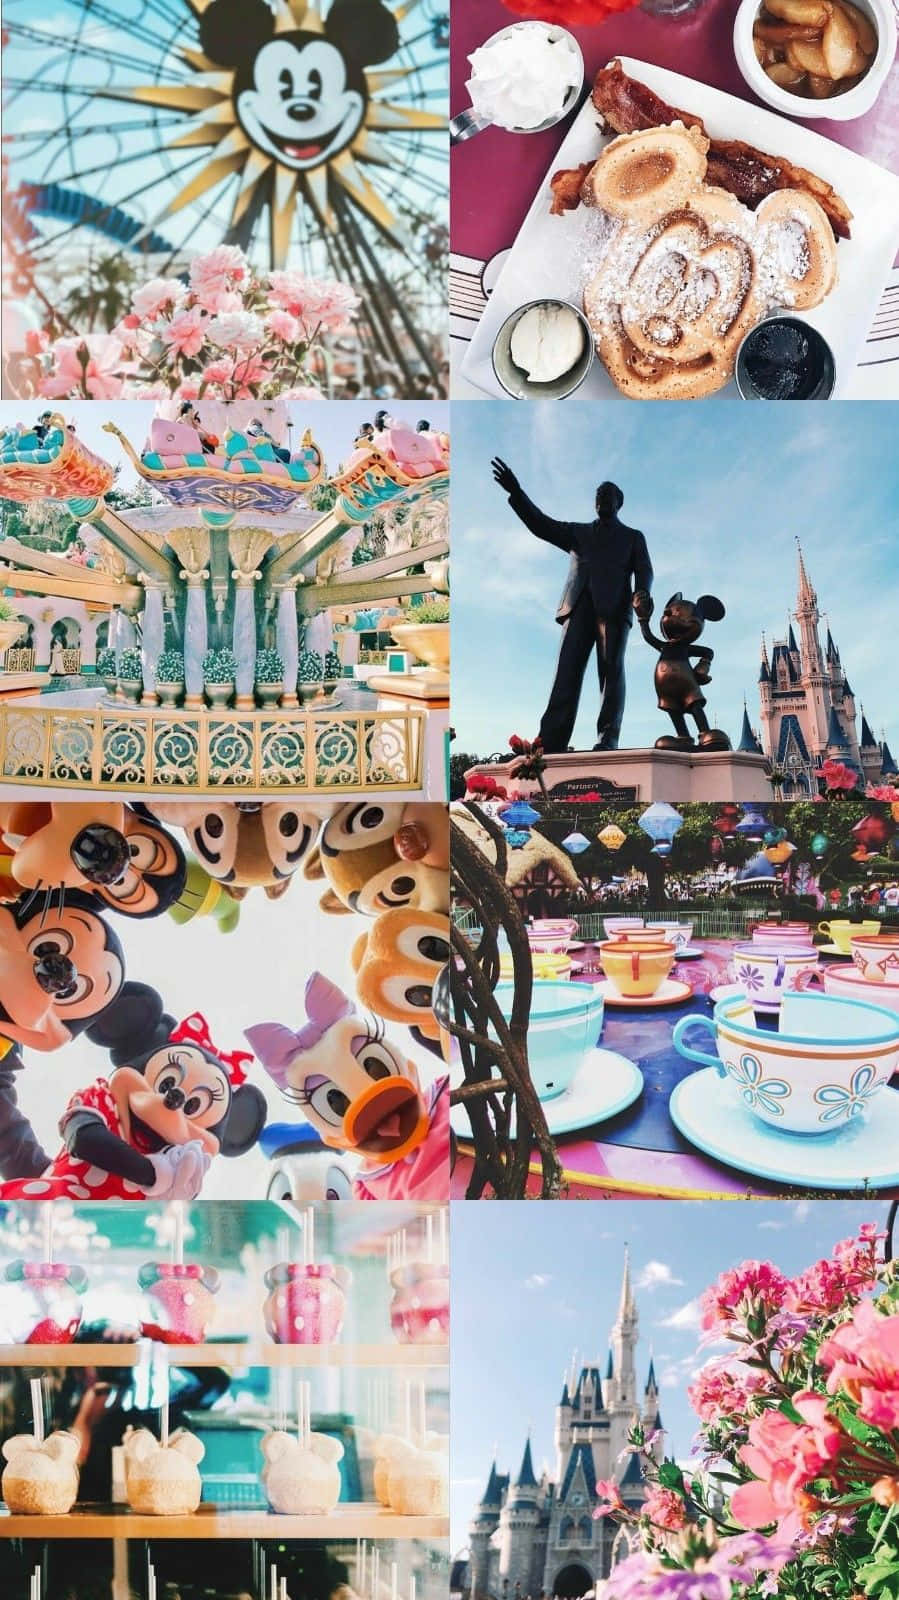 Aesthetic Disney Wallpaper